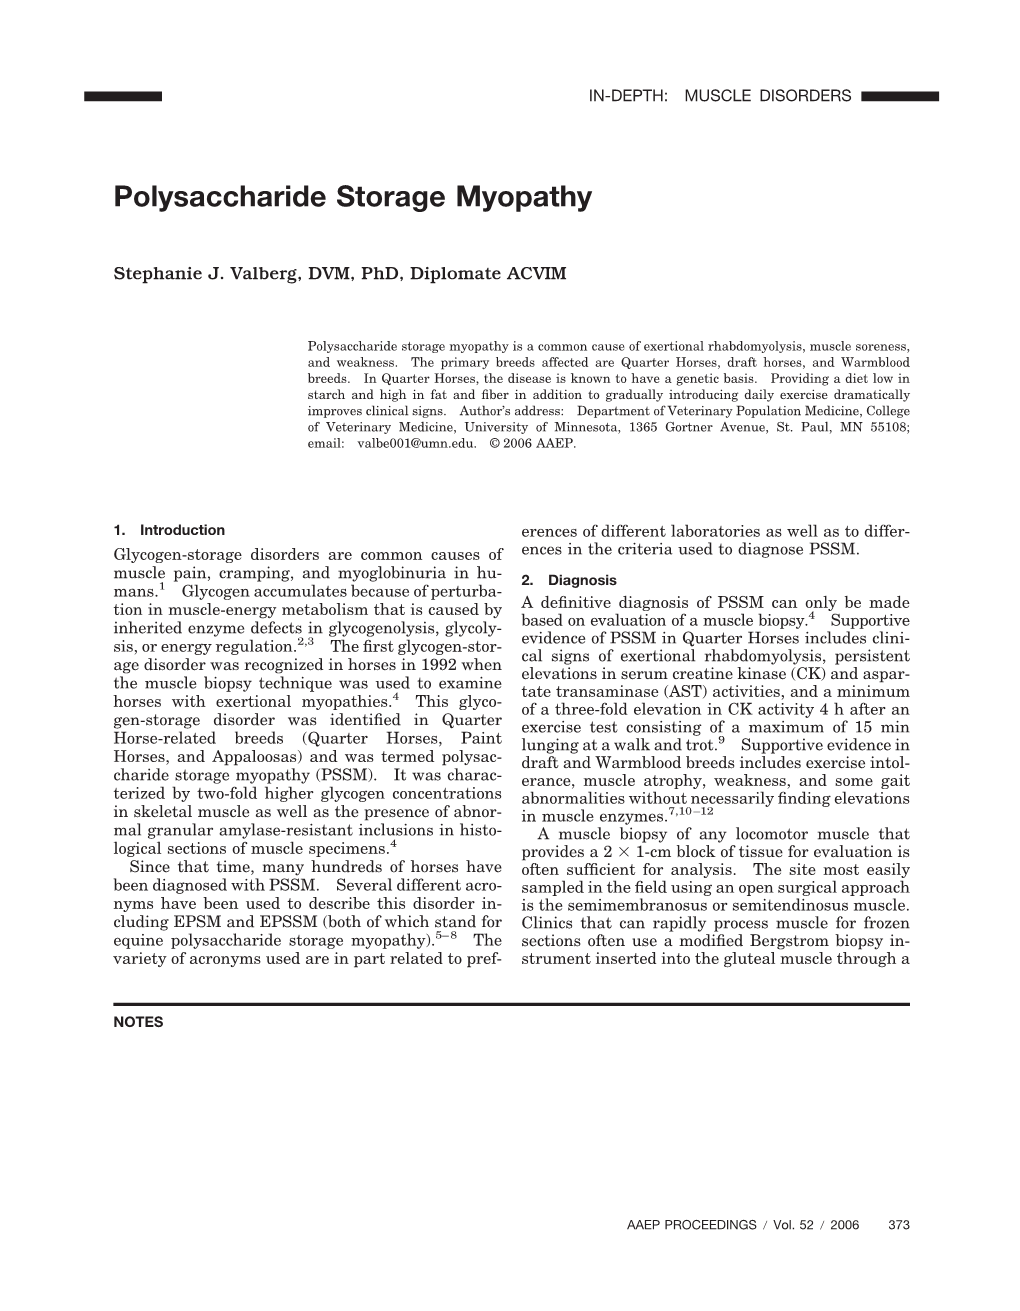 Equine Polysaccharide Storage Myopathy